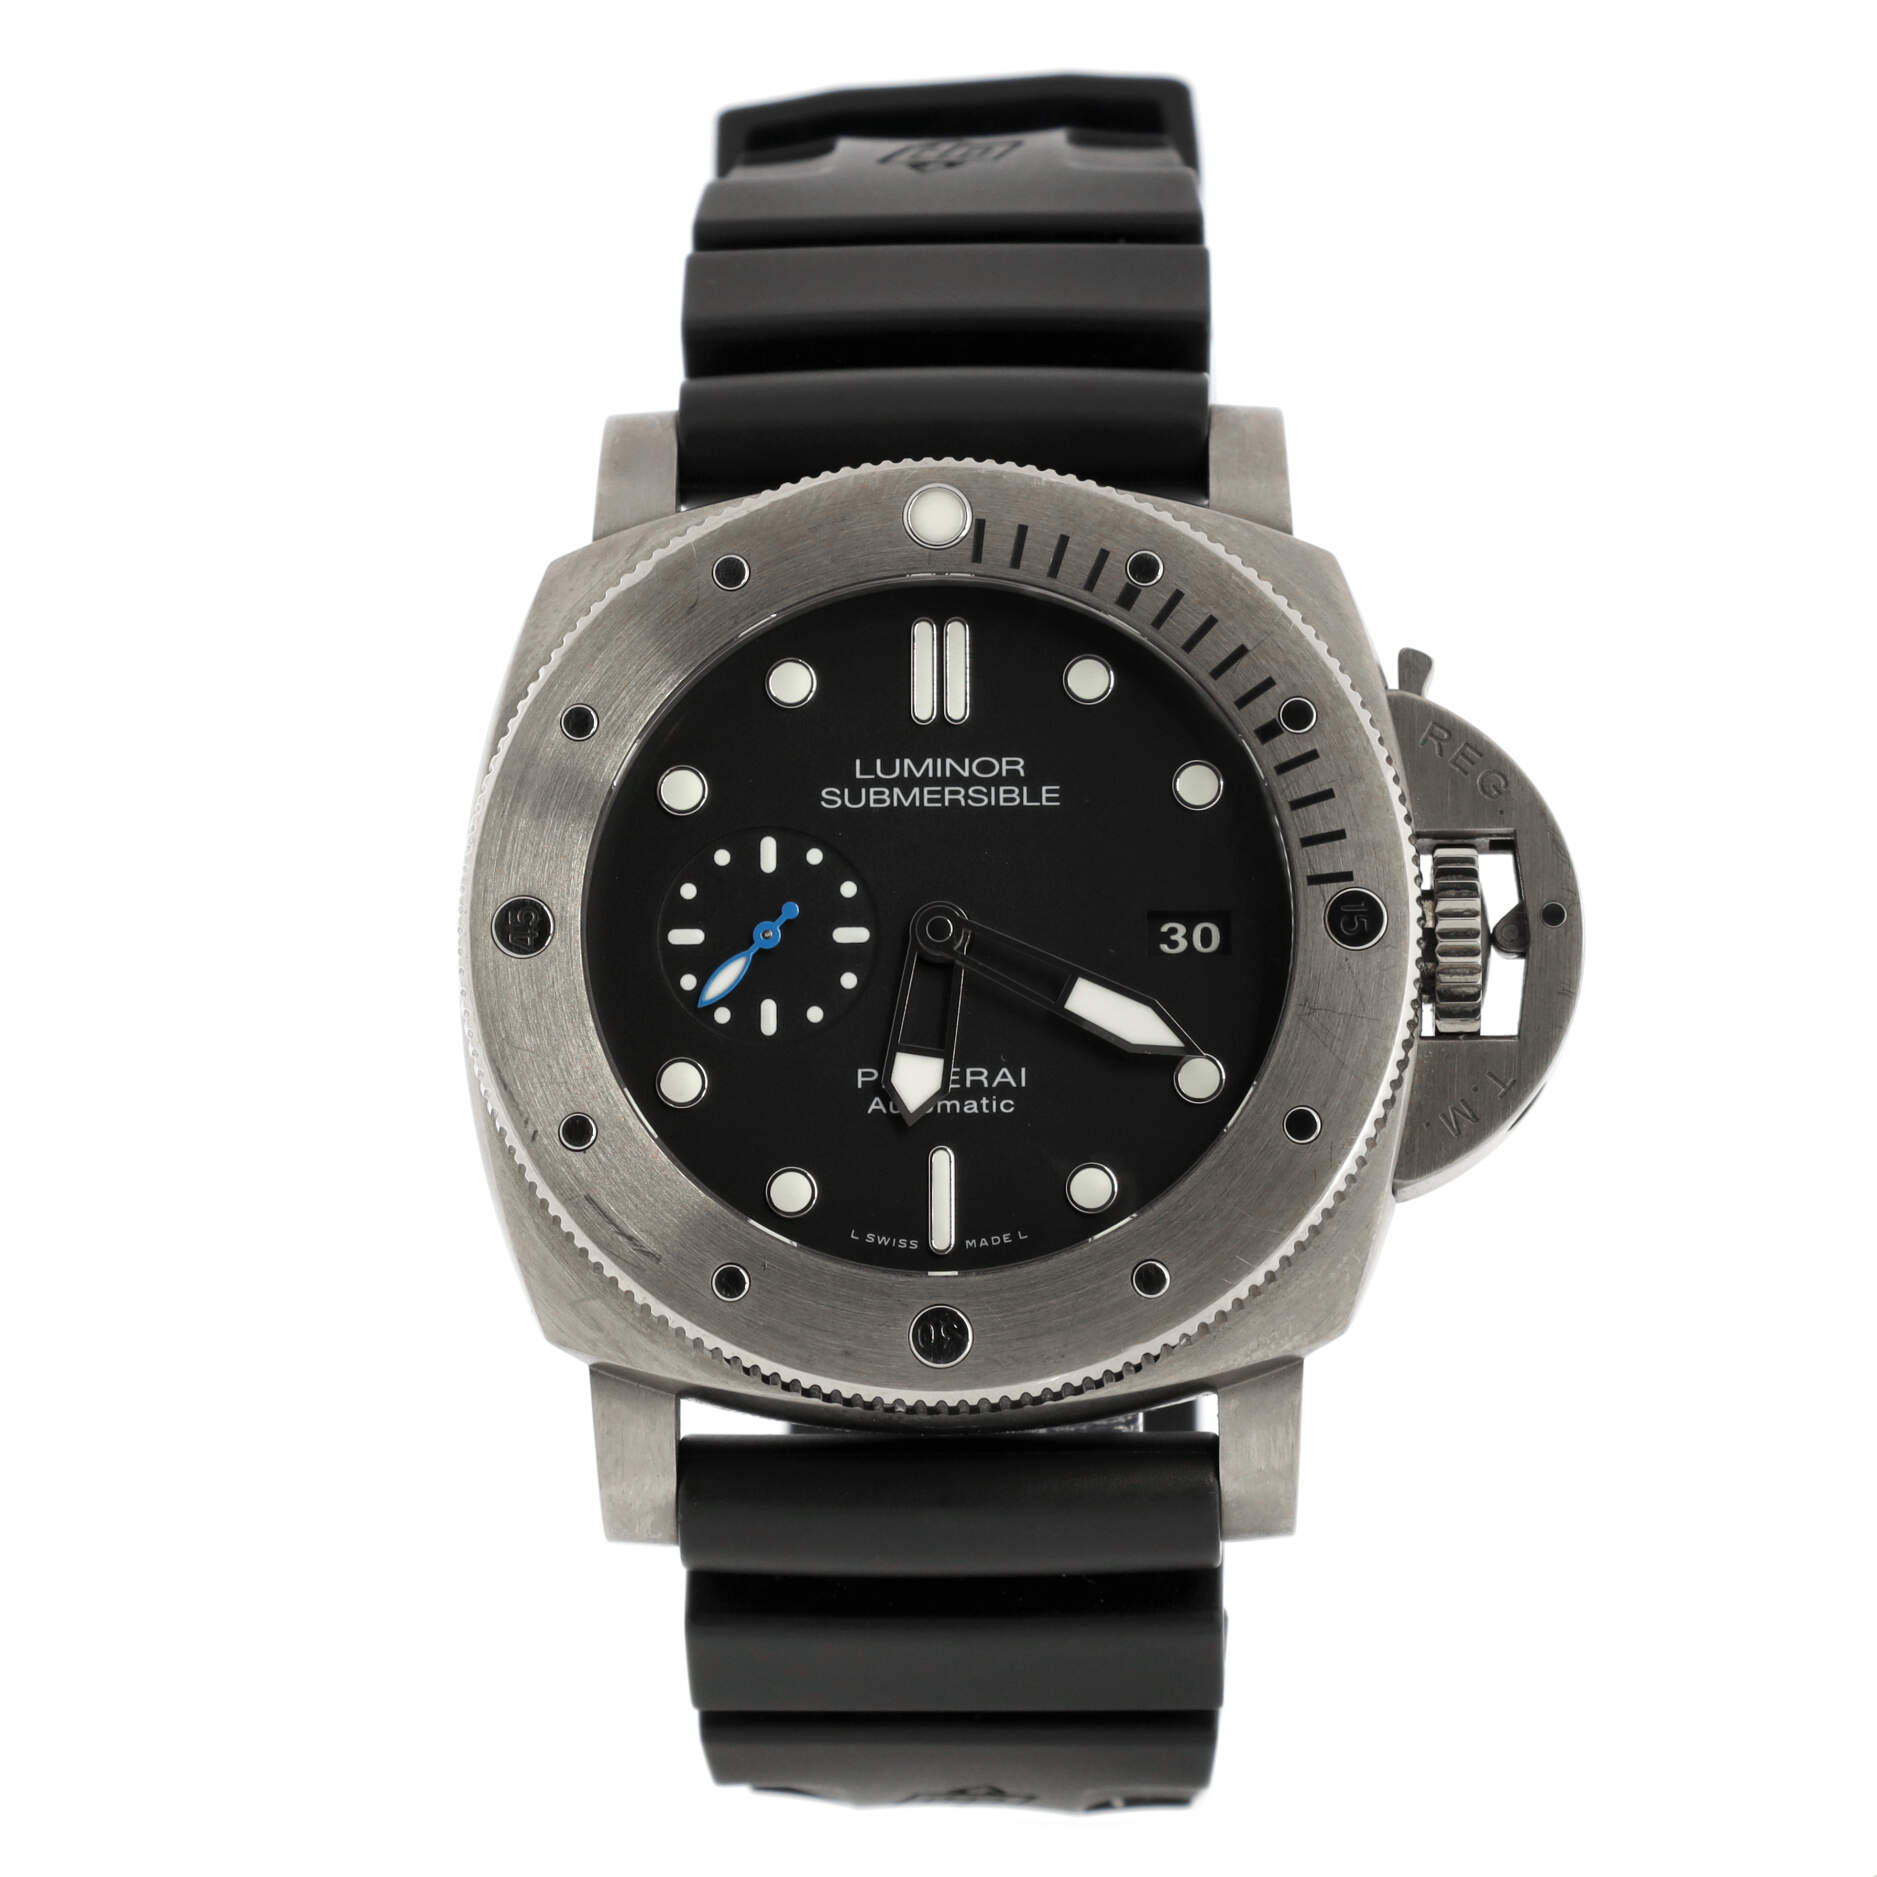 Luminor Submersible 1950 3 Days Automatic Watch (PAM01305)